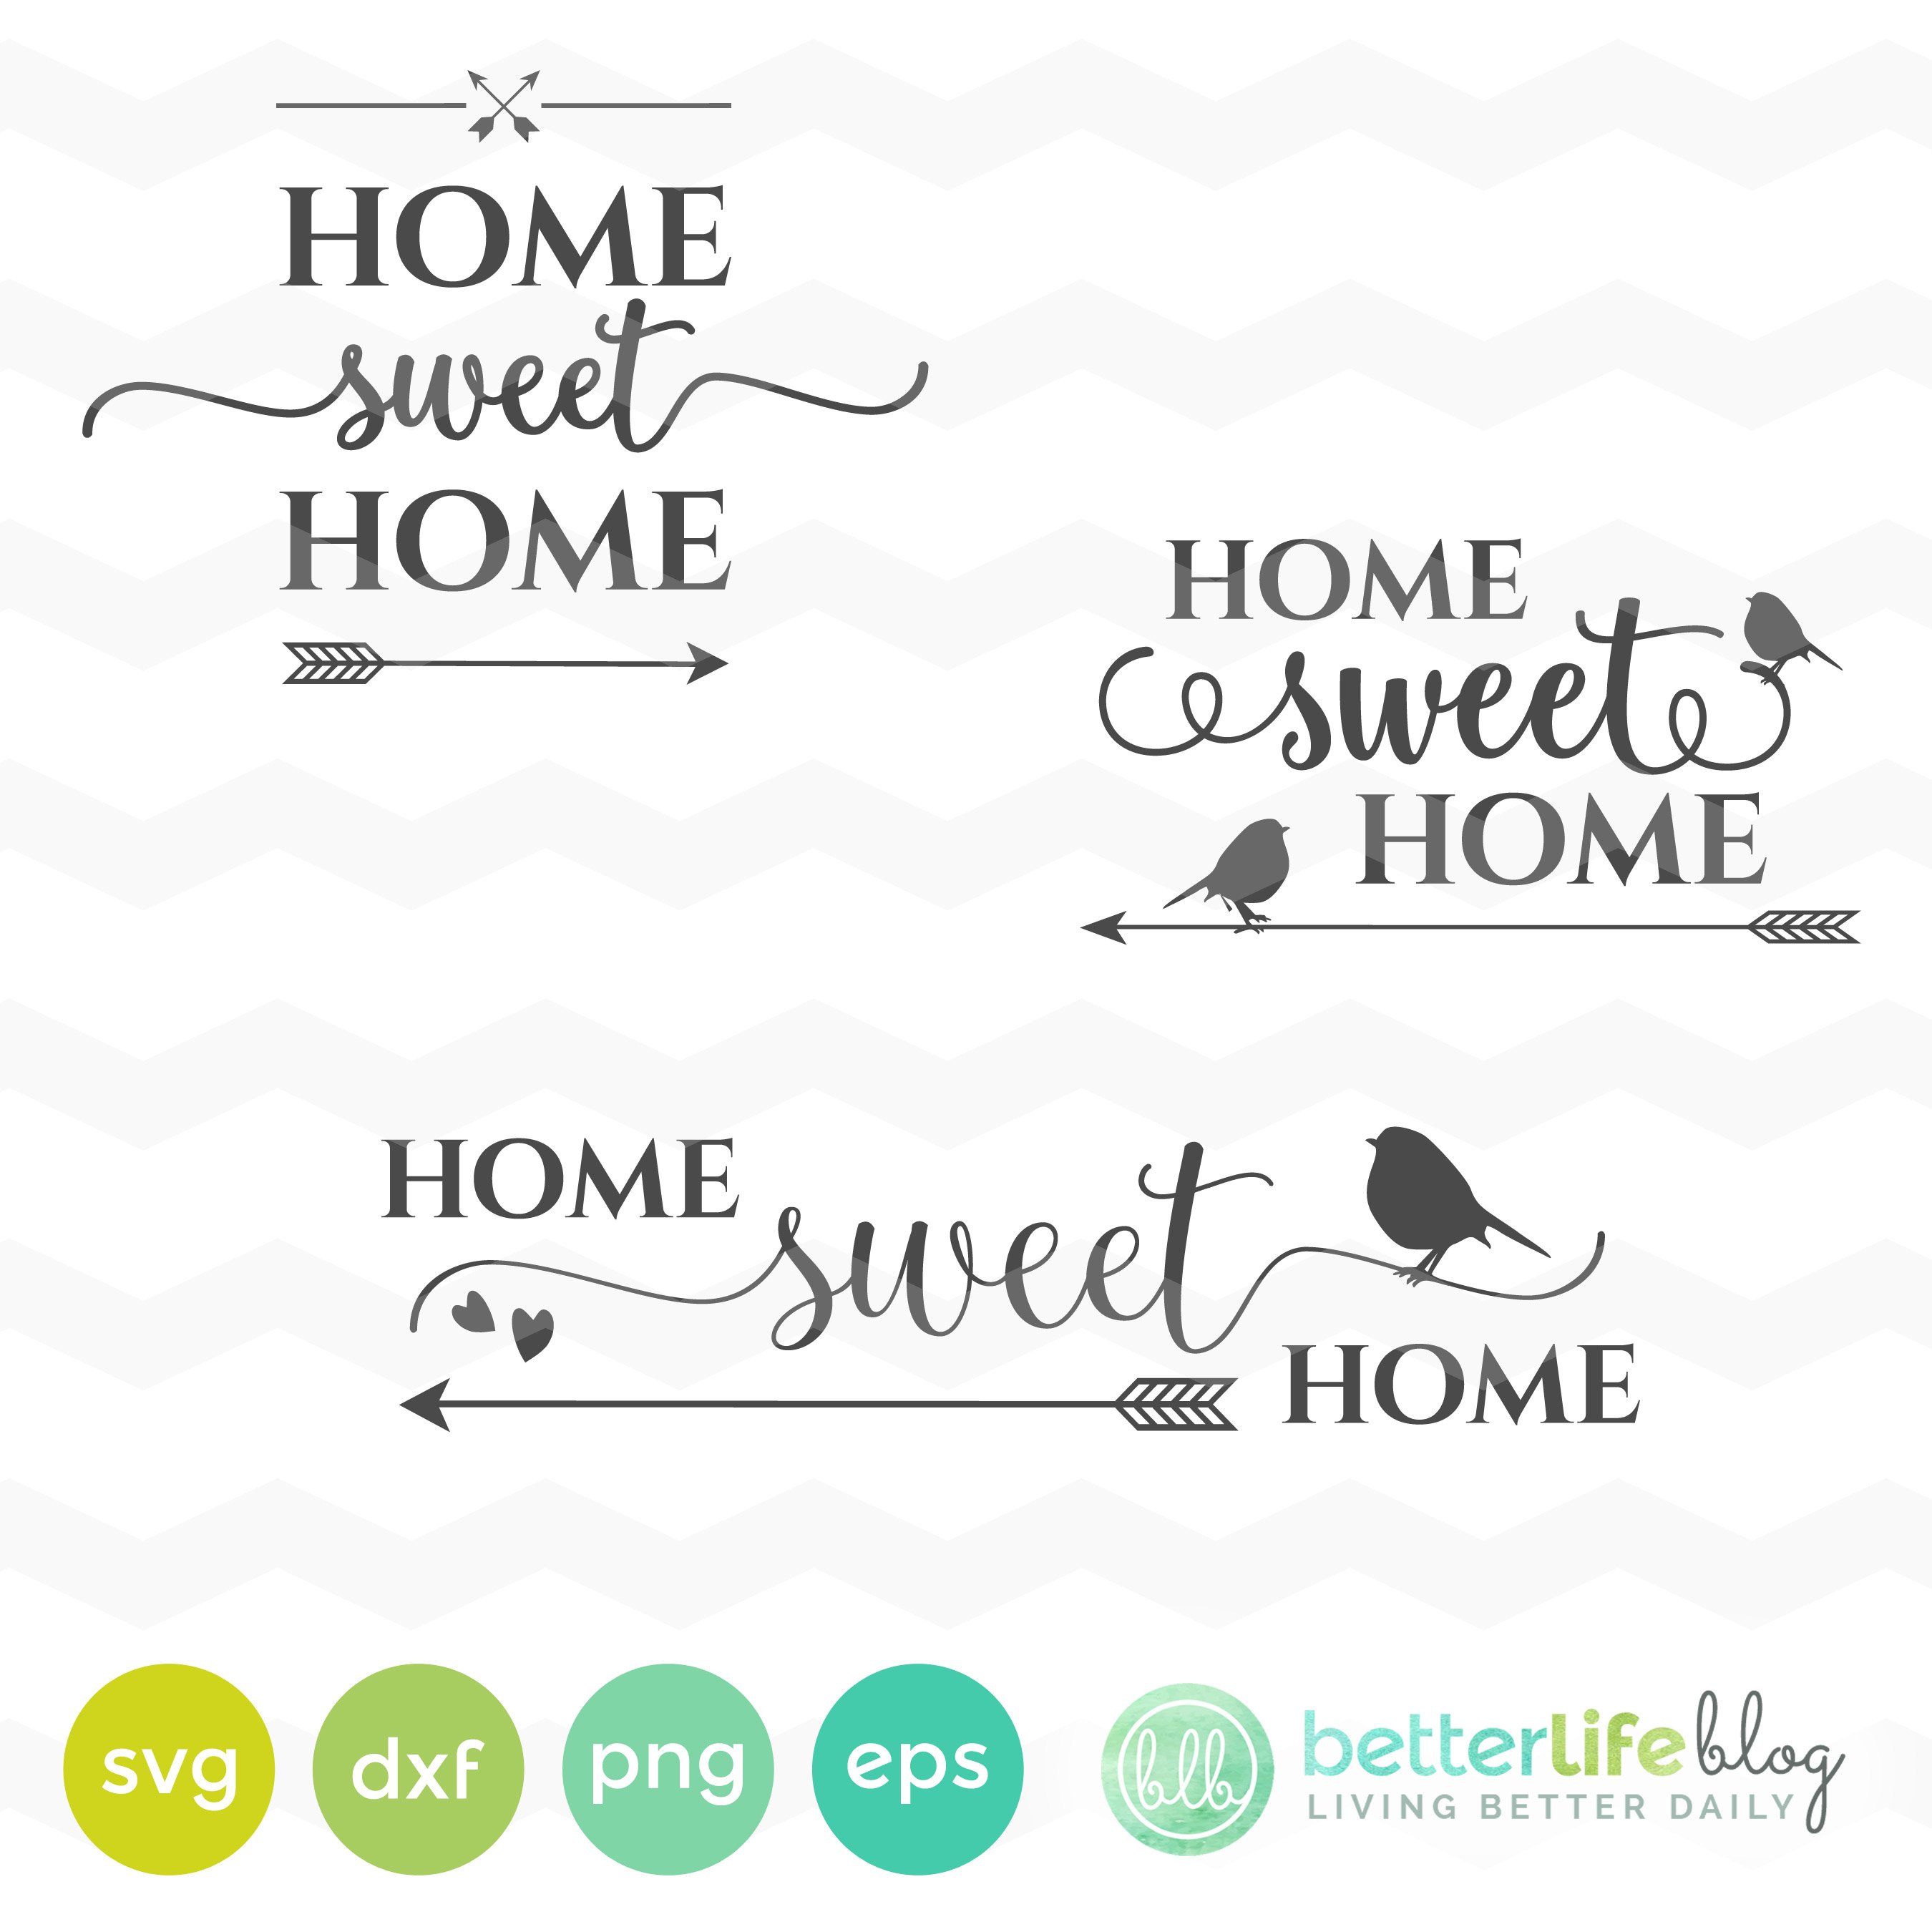 Download Home Sweet Home SVG - Better Life Blog